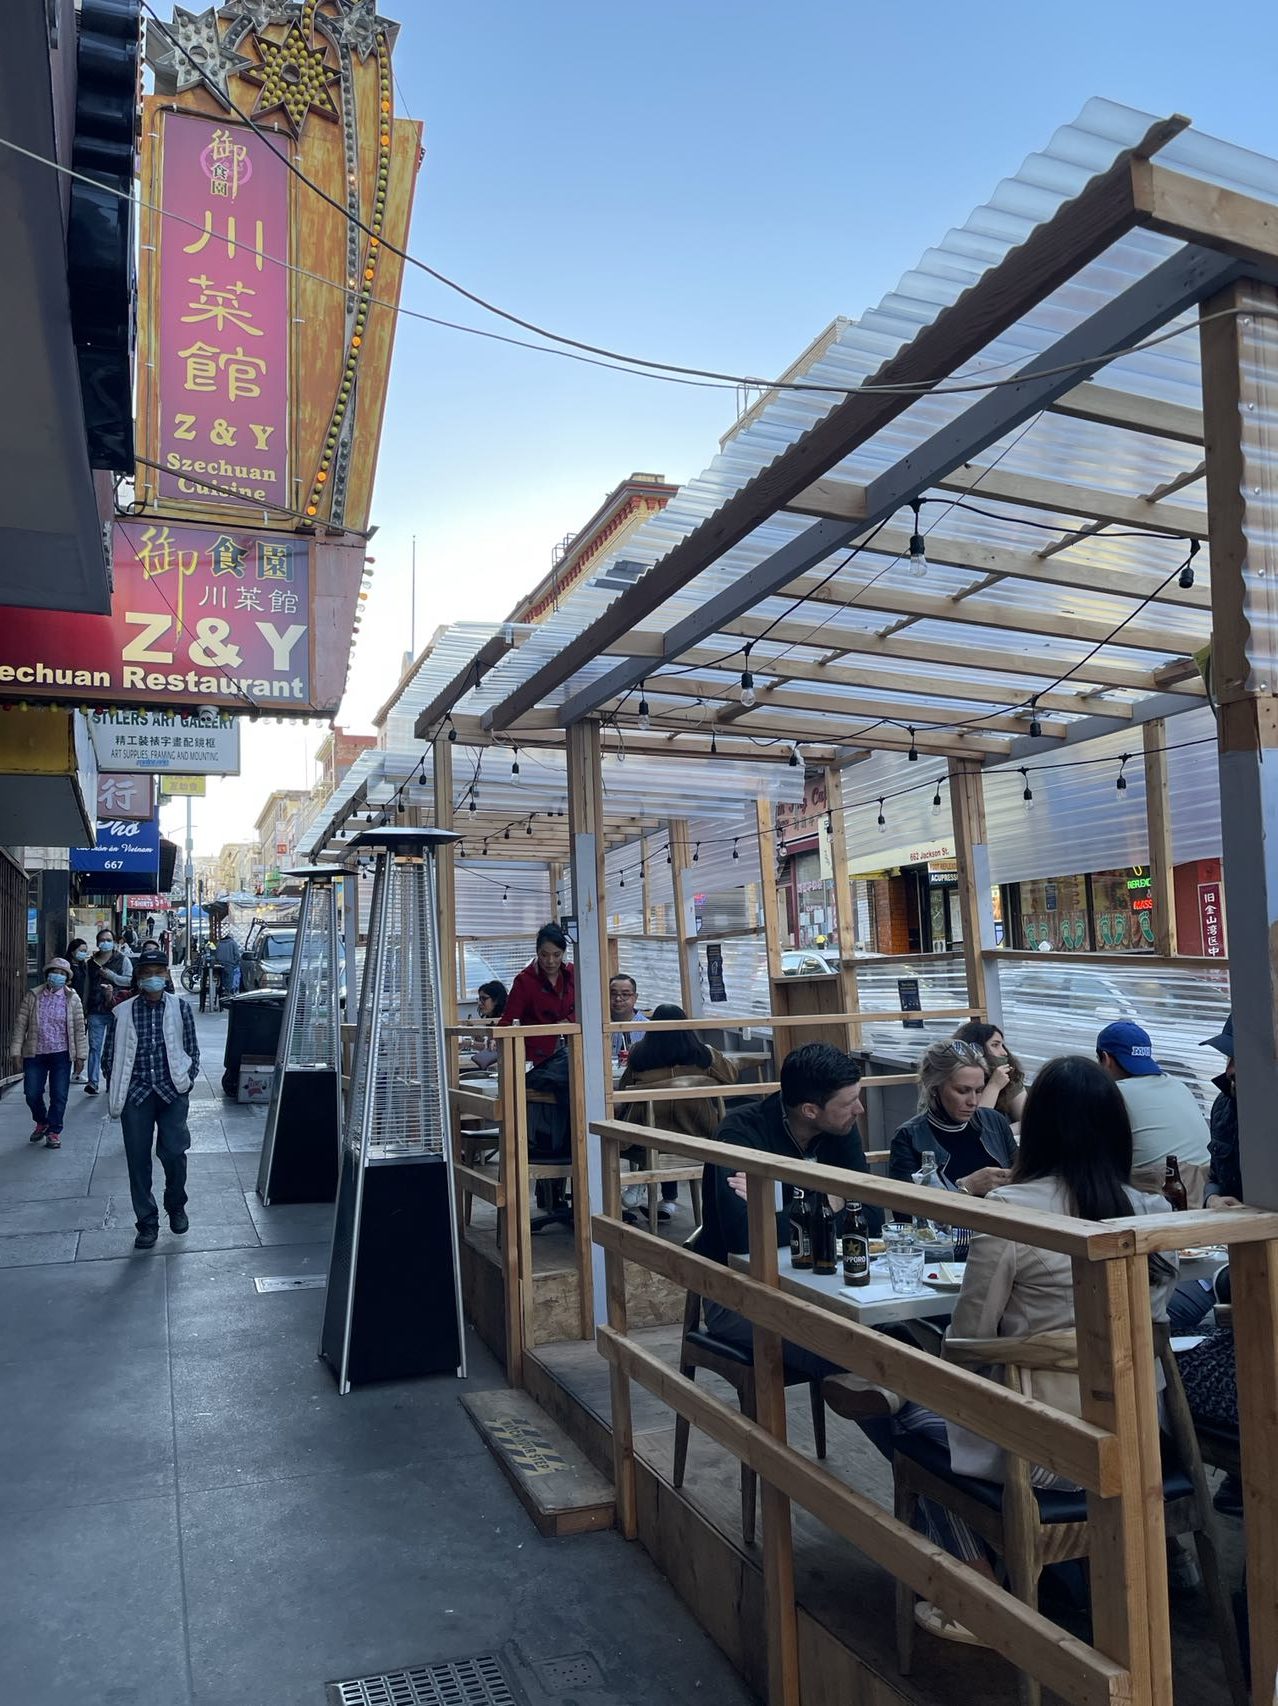 Outdoor Dining - Z & Y Restaurant, Chinatown - San Francisco